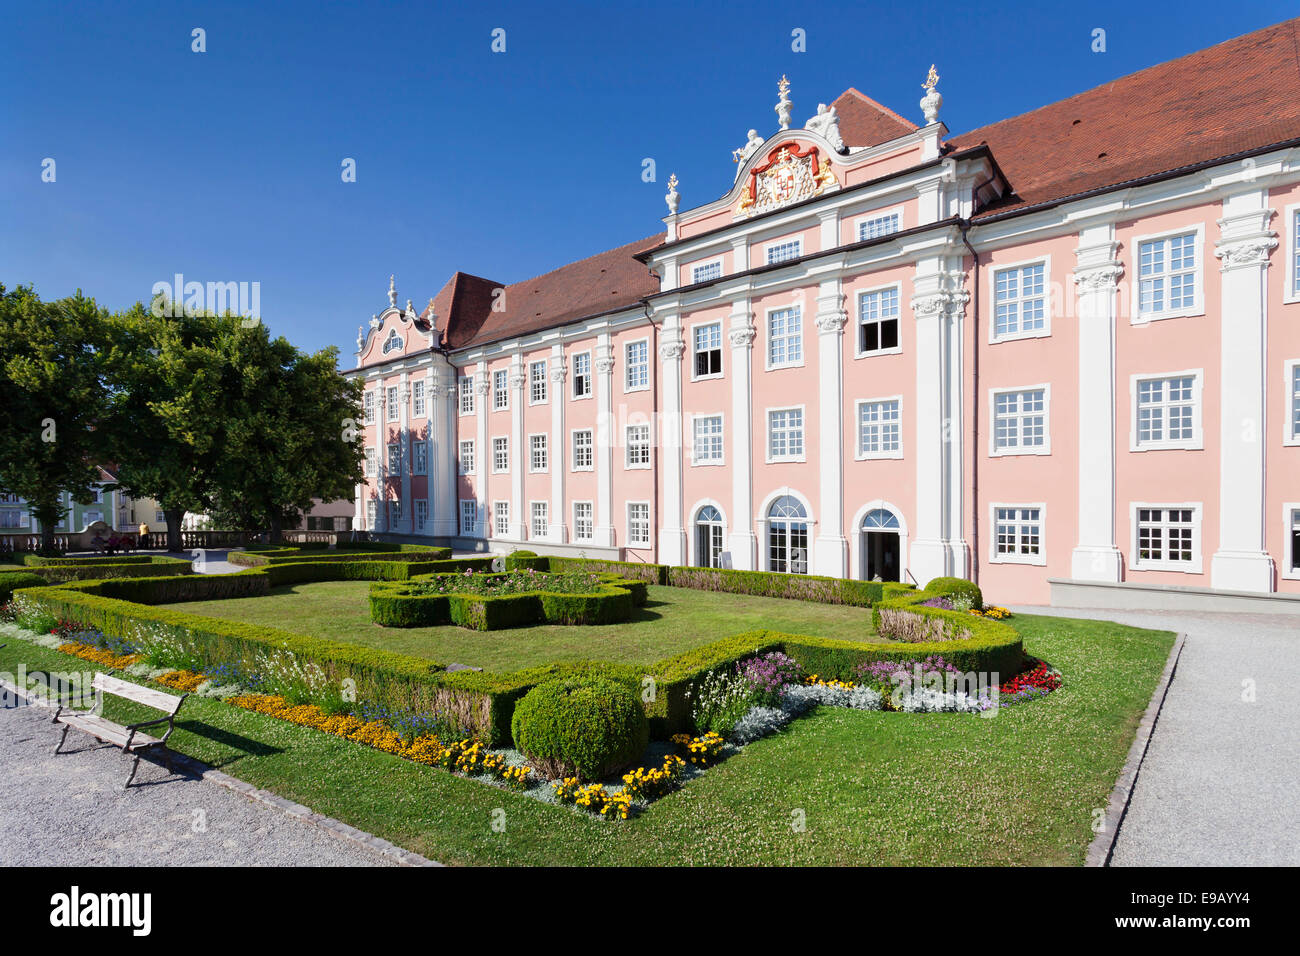 Neues Schloss Castle, Meersburg, Baden-Württemberg, Germany Stock Photo